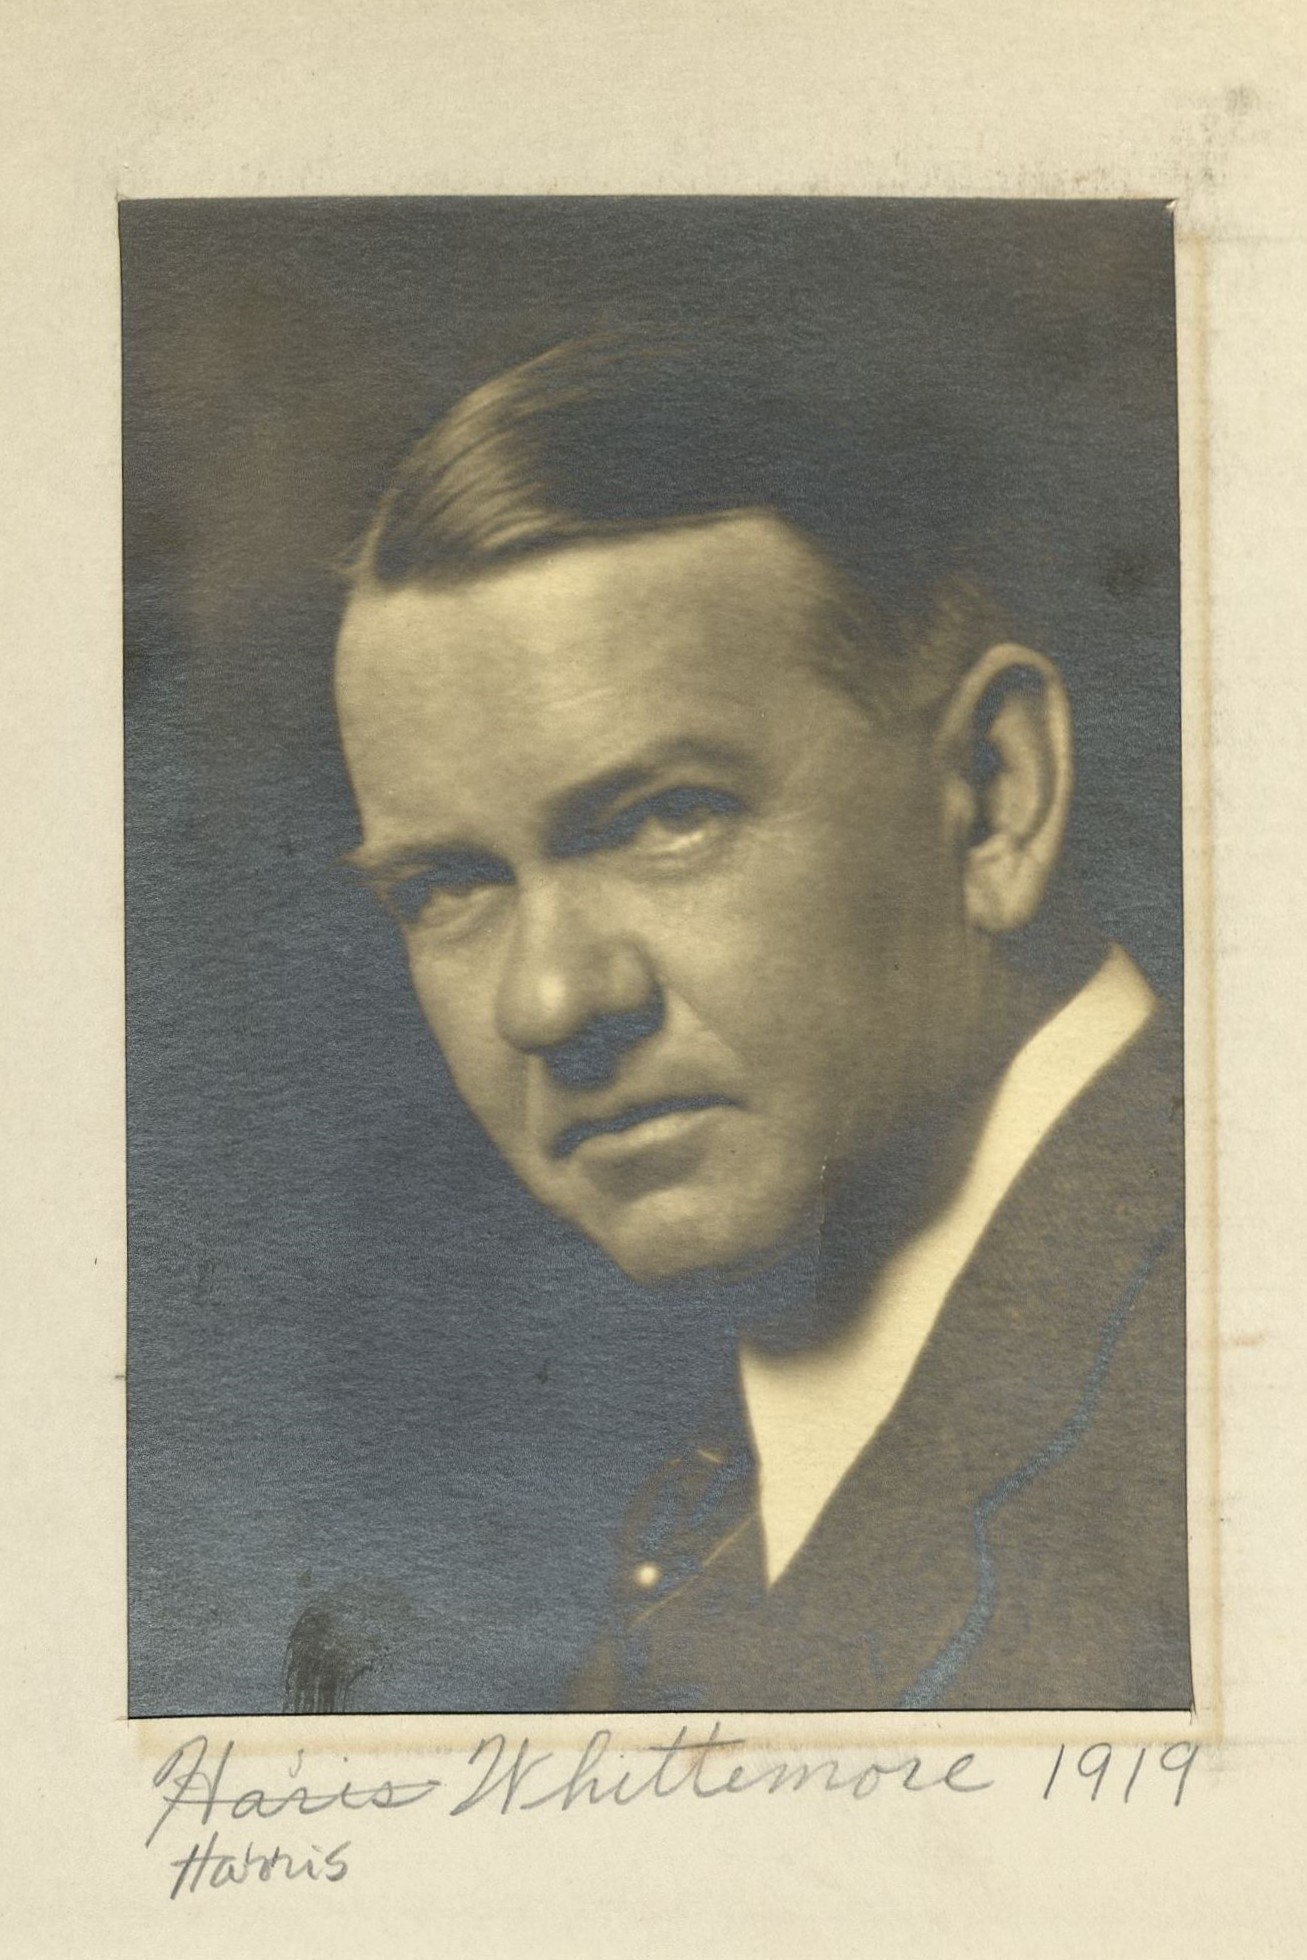 Member portrait of Harris Whittemore